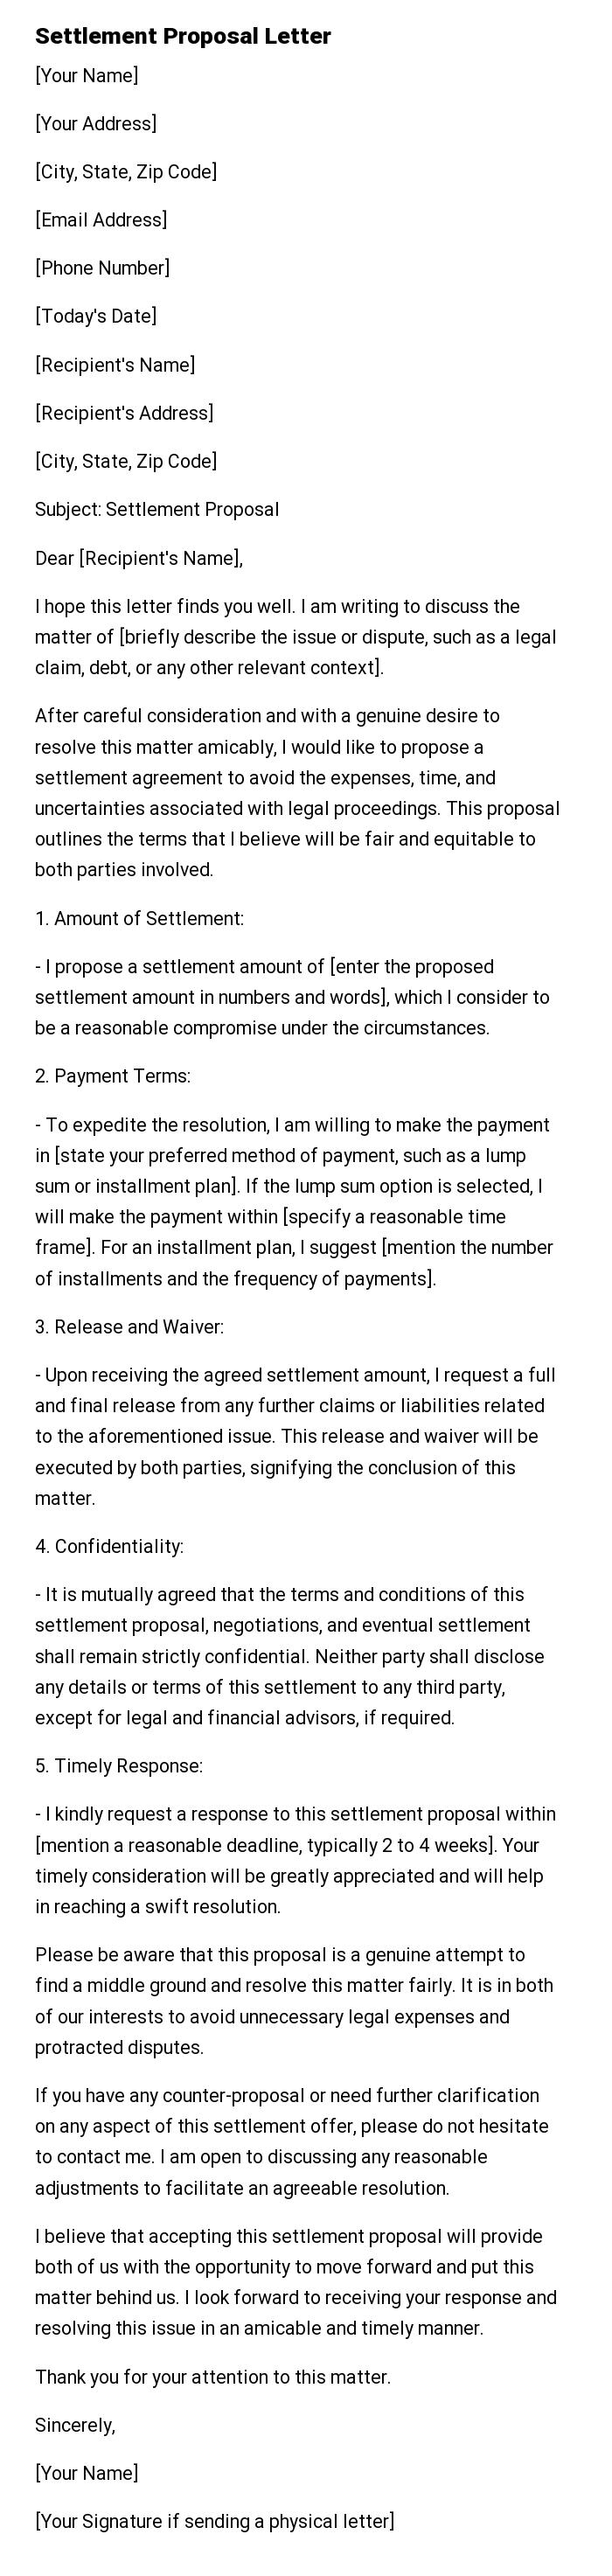 Settlement Proposal Letter